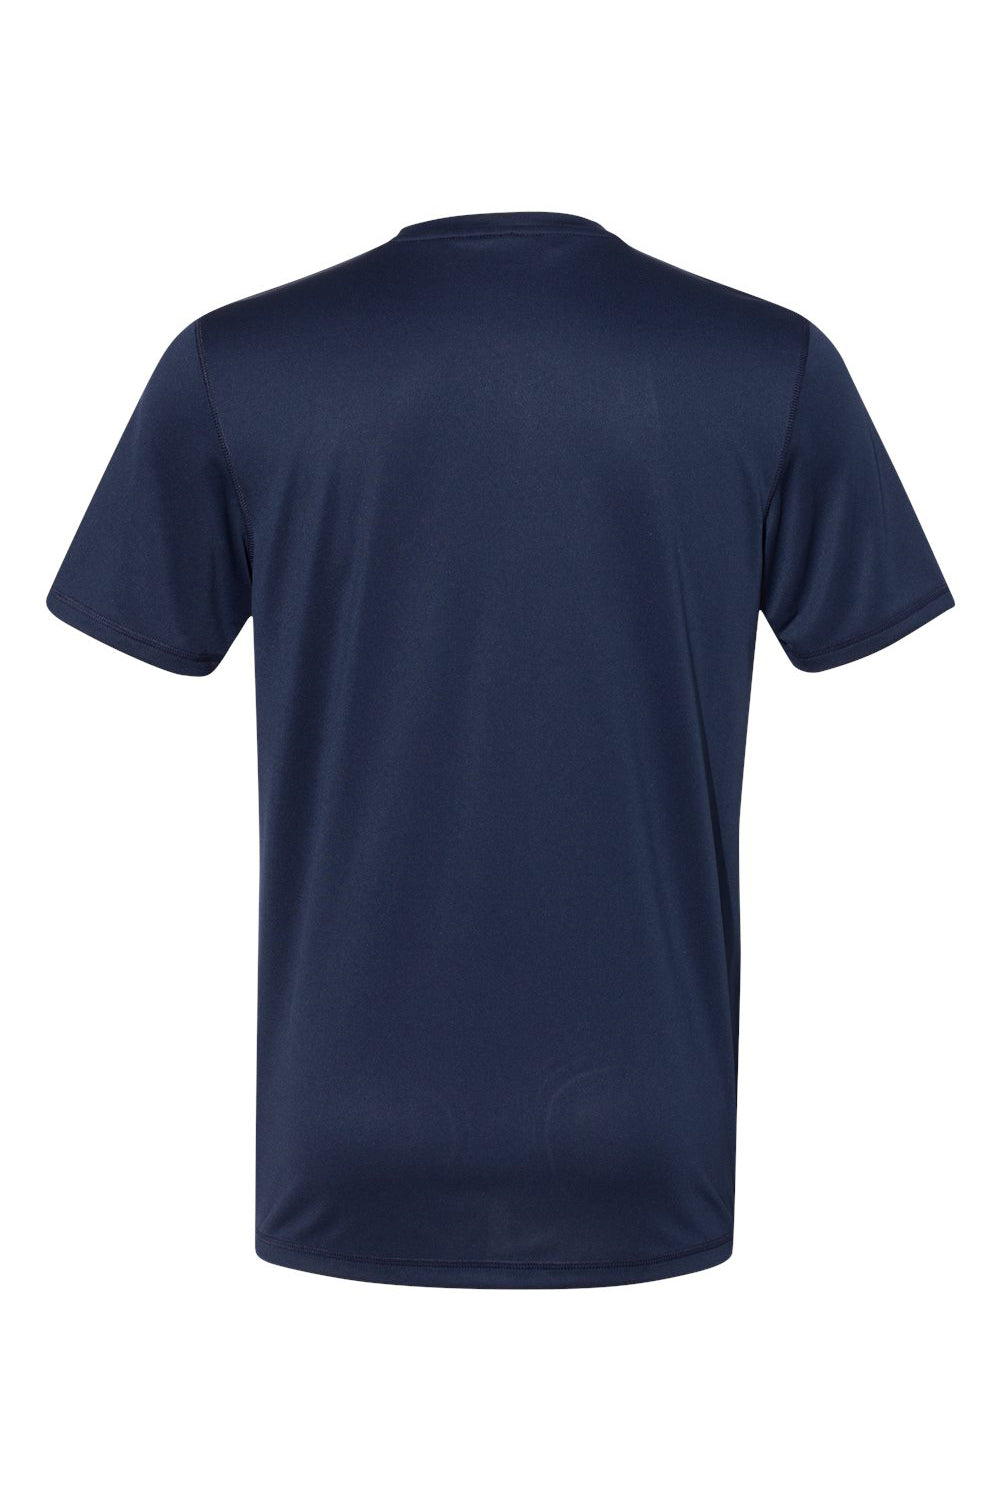 Adidas A376 Mens Short Sleeve Crewneck T-Shirt Collegiate Navy Blue Flat Back